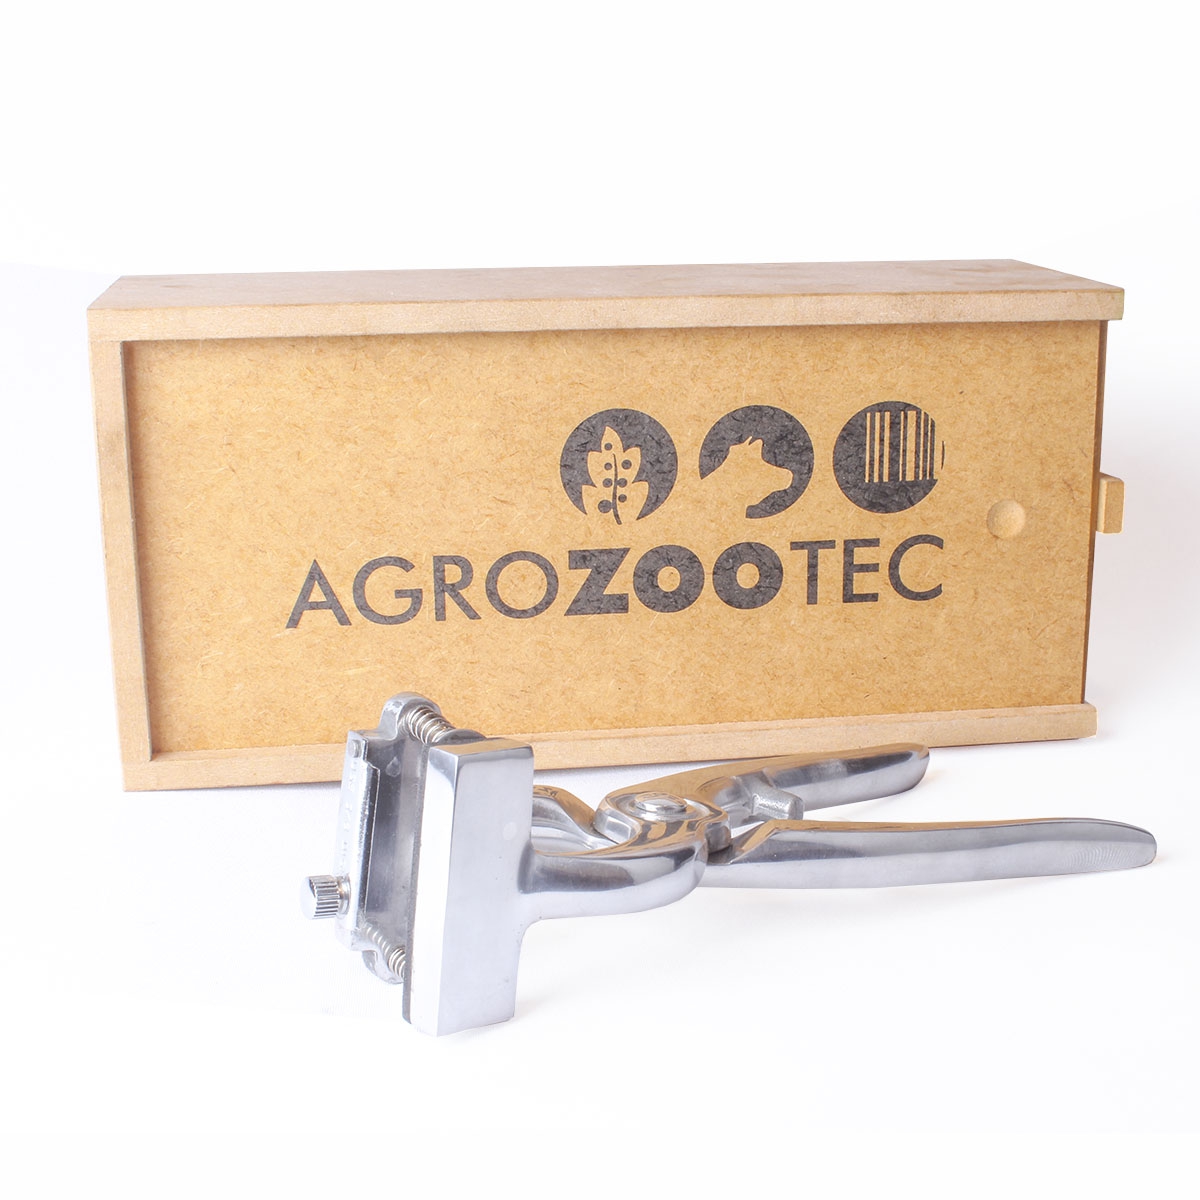  Agrozootec-33